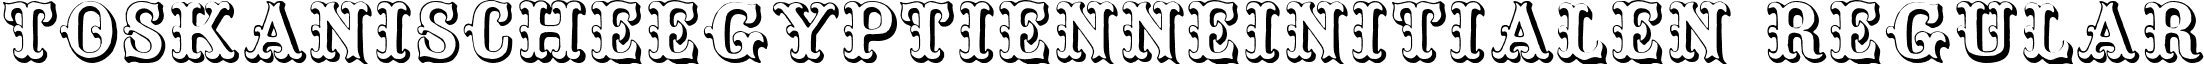 ToskanischeEgyptienneInitialen Regular font - ToskanischeEgyptienneInitialen.ttf